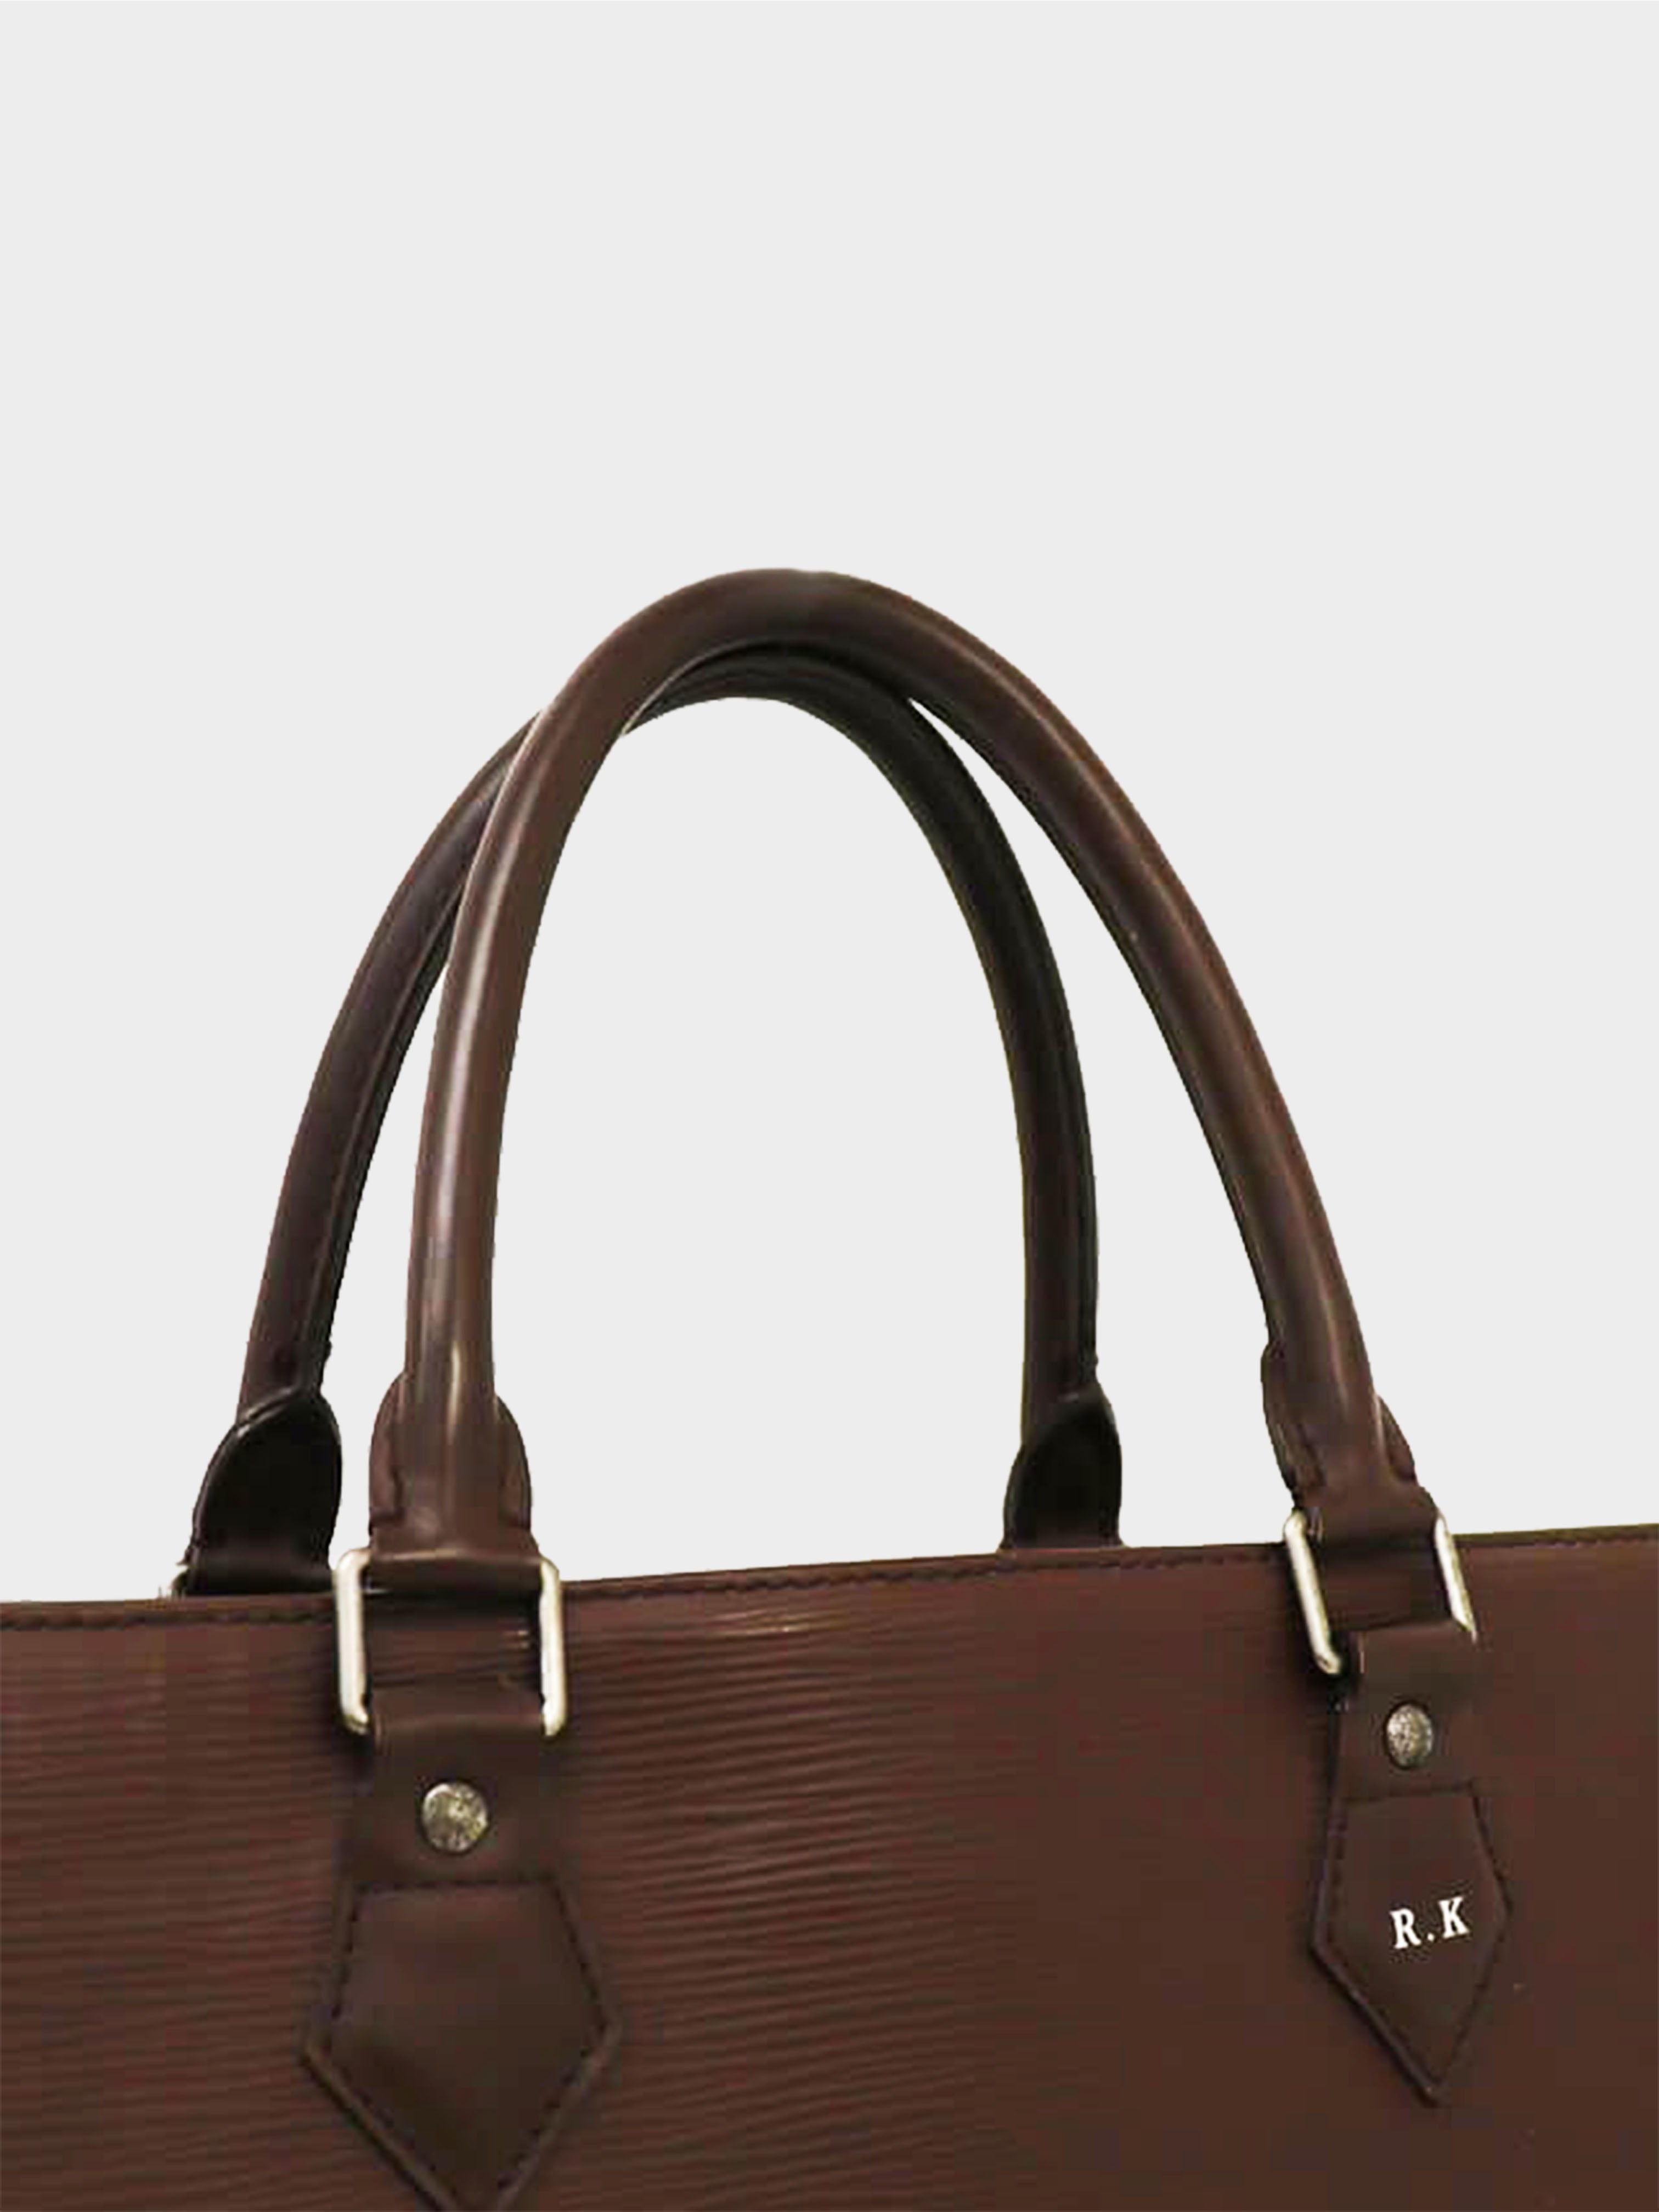 Sac Plat PM Monogram - Women - Handbags